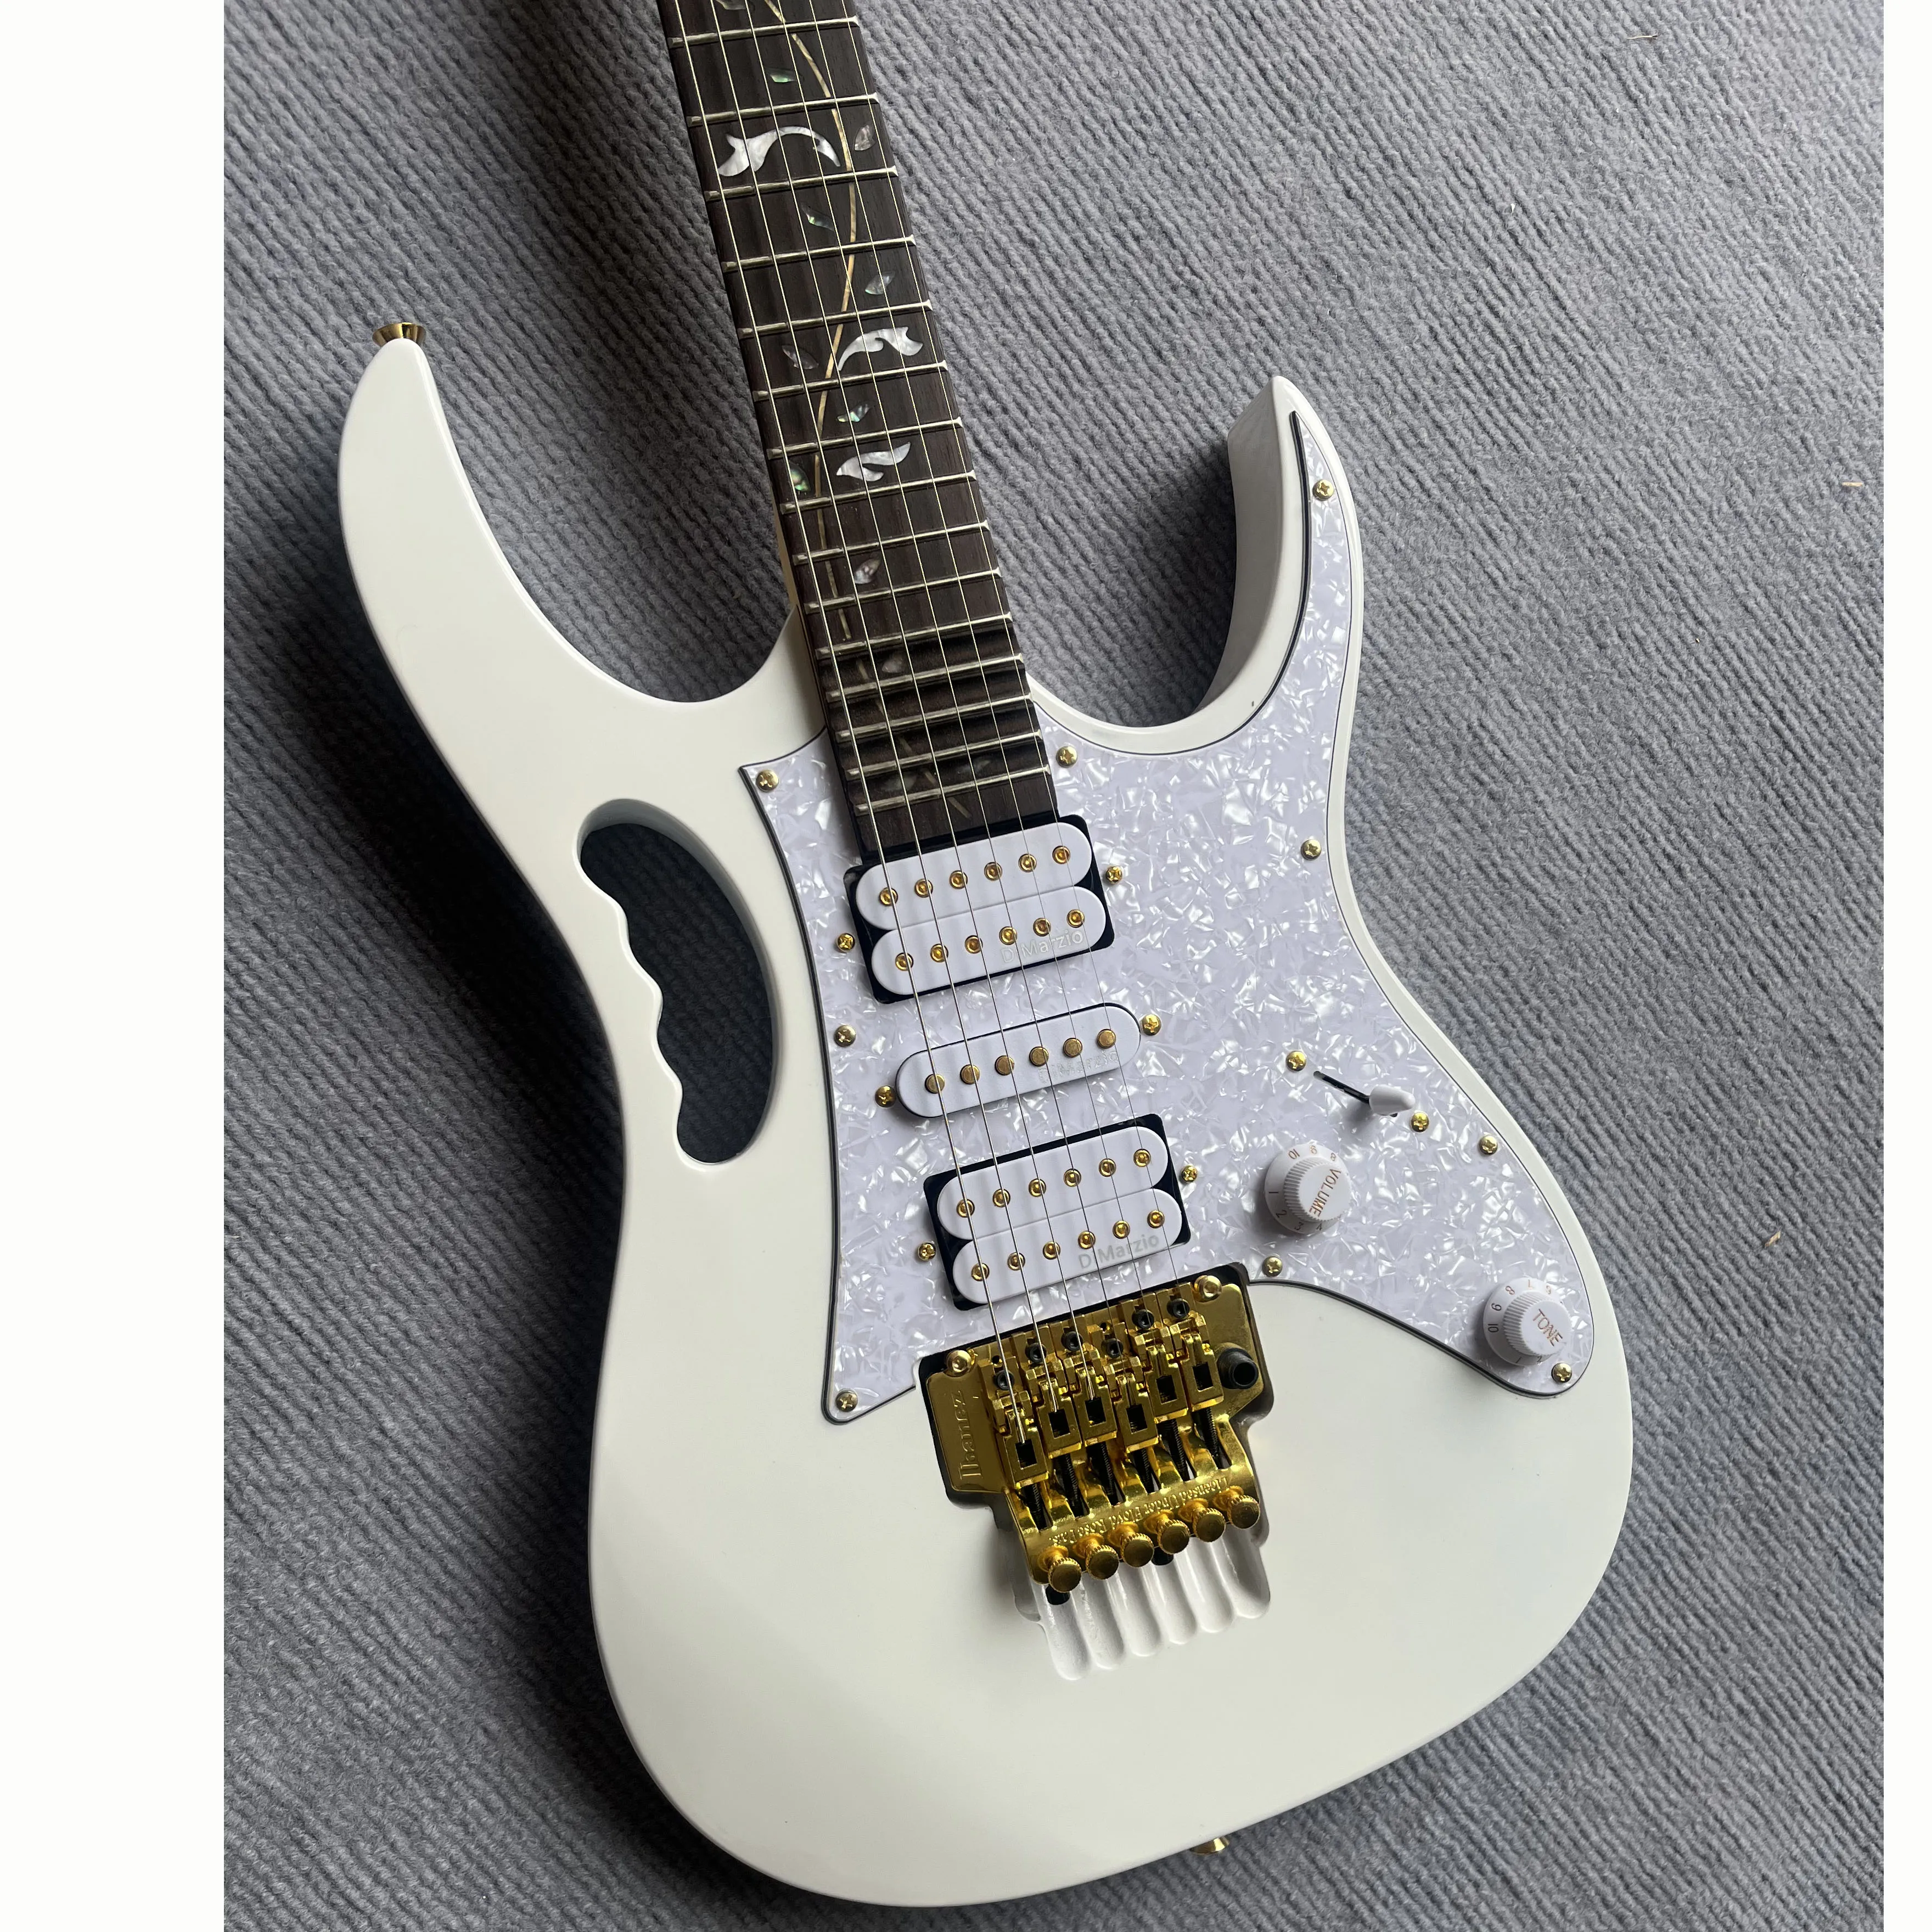 

Classic Brand 7V Electric Guitar Jem Serise Gold Hardware White Body Golden Bridge HSH Pickups High Quality Guitars Guitarra